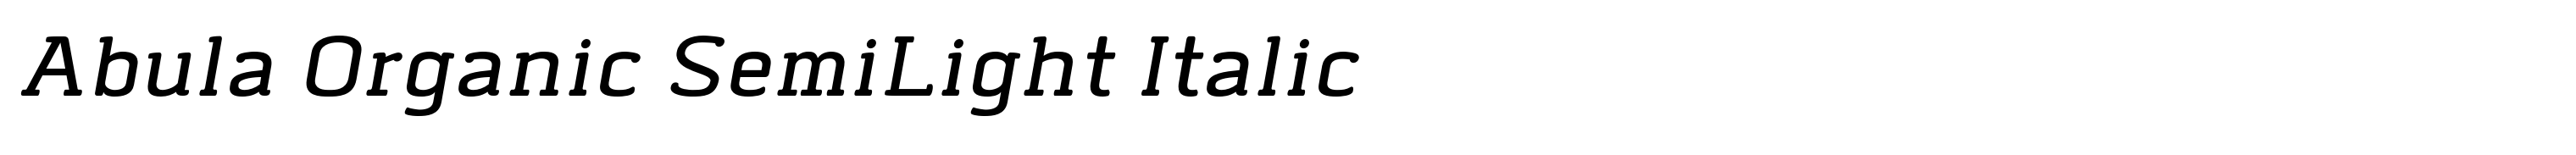 Abula Organic SemiLight Italic